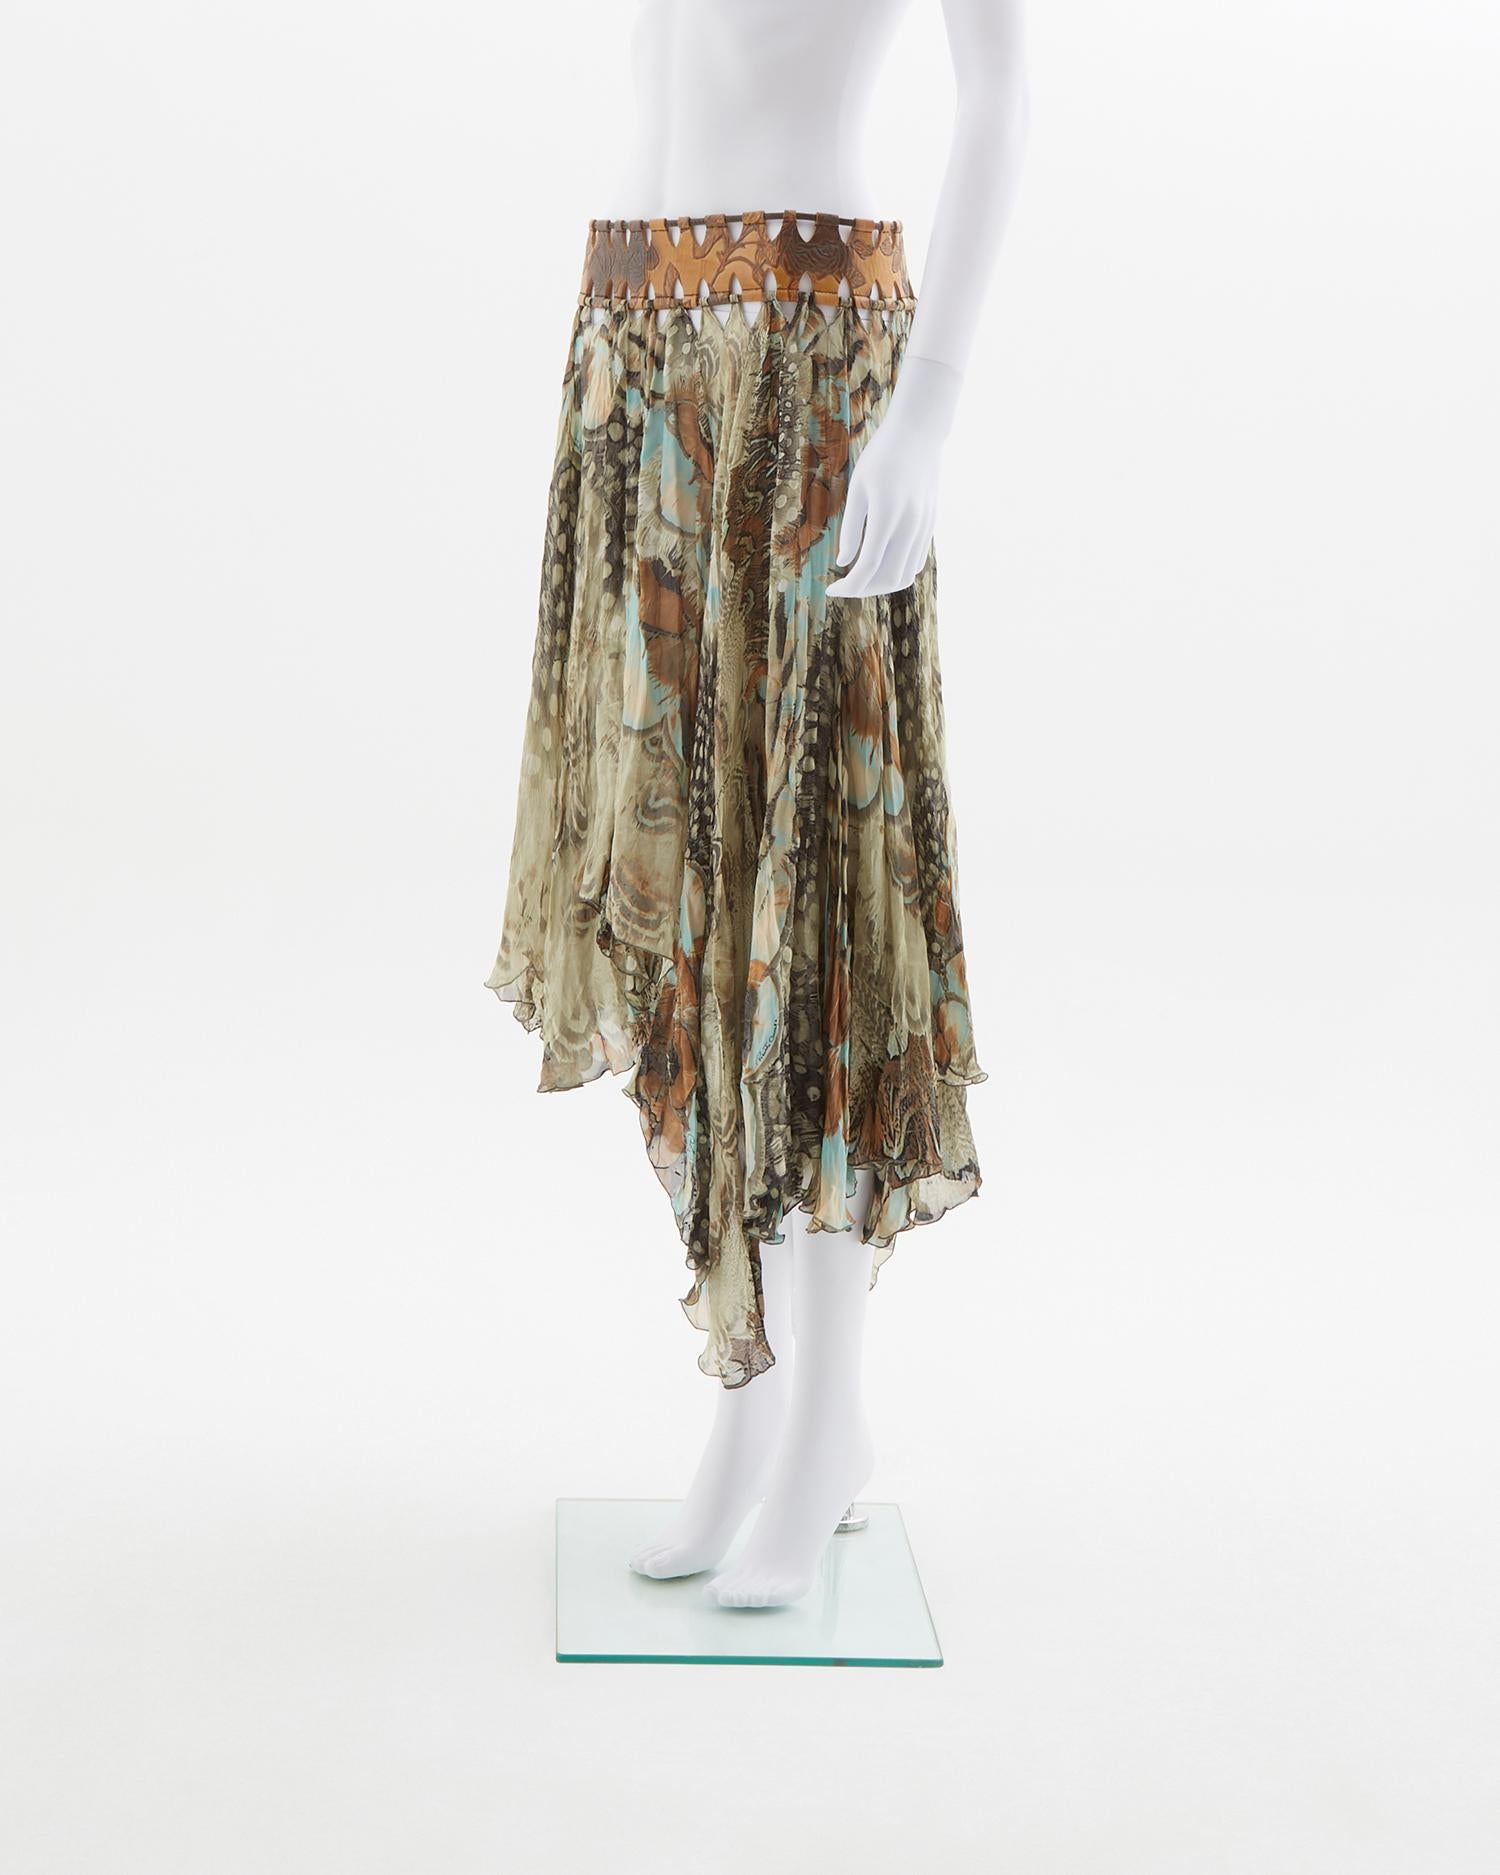 Women's Roberto Cavalli leather belt feather printed silky chiffon skirt, ss 2004